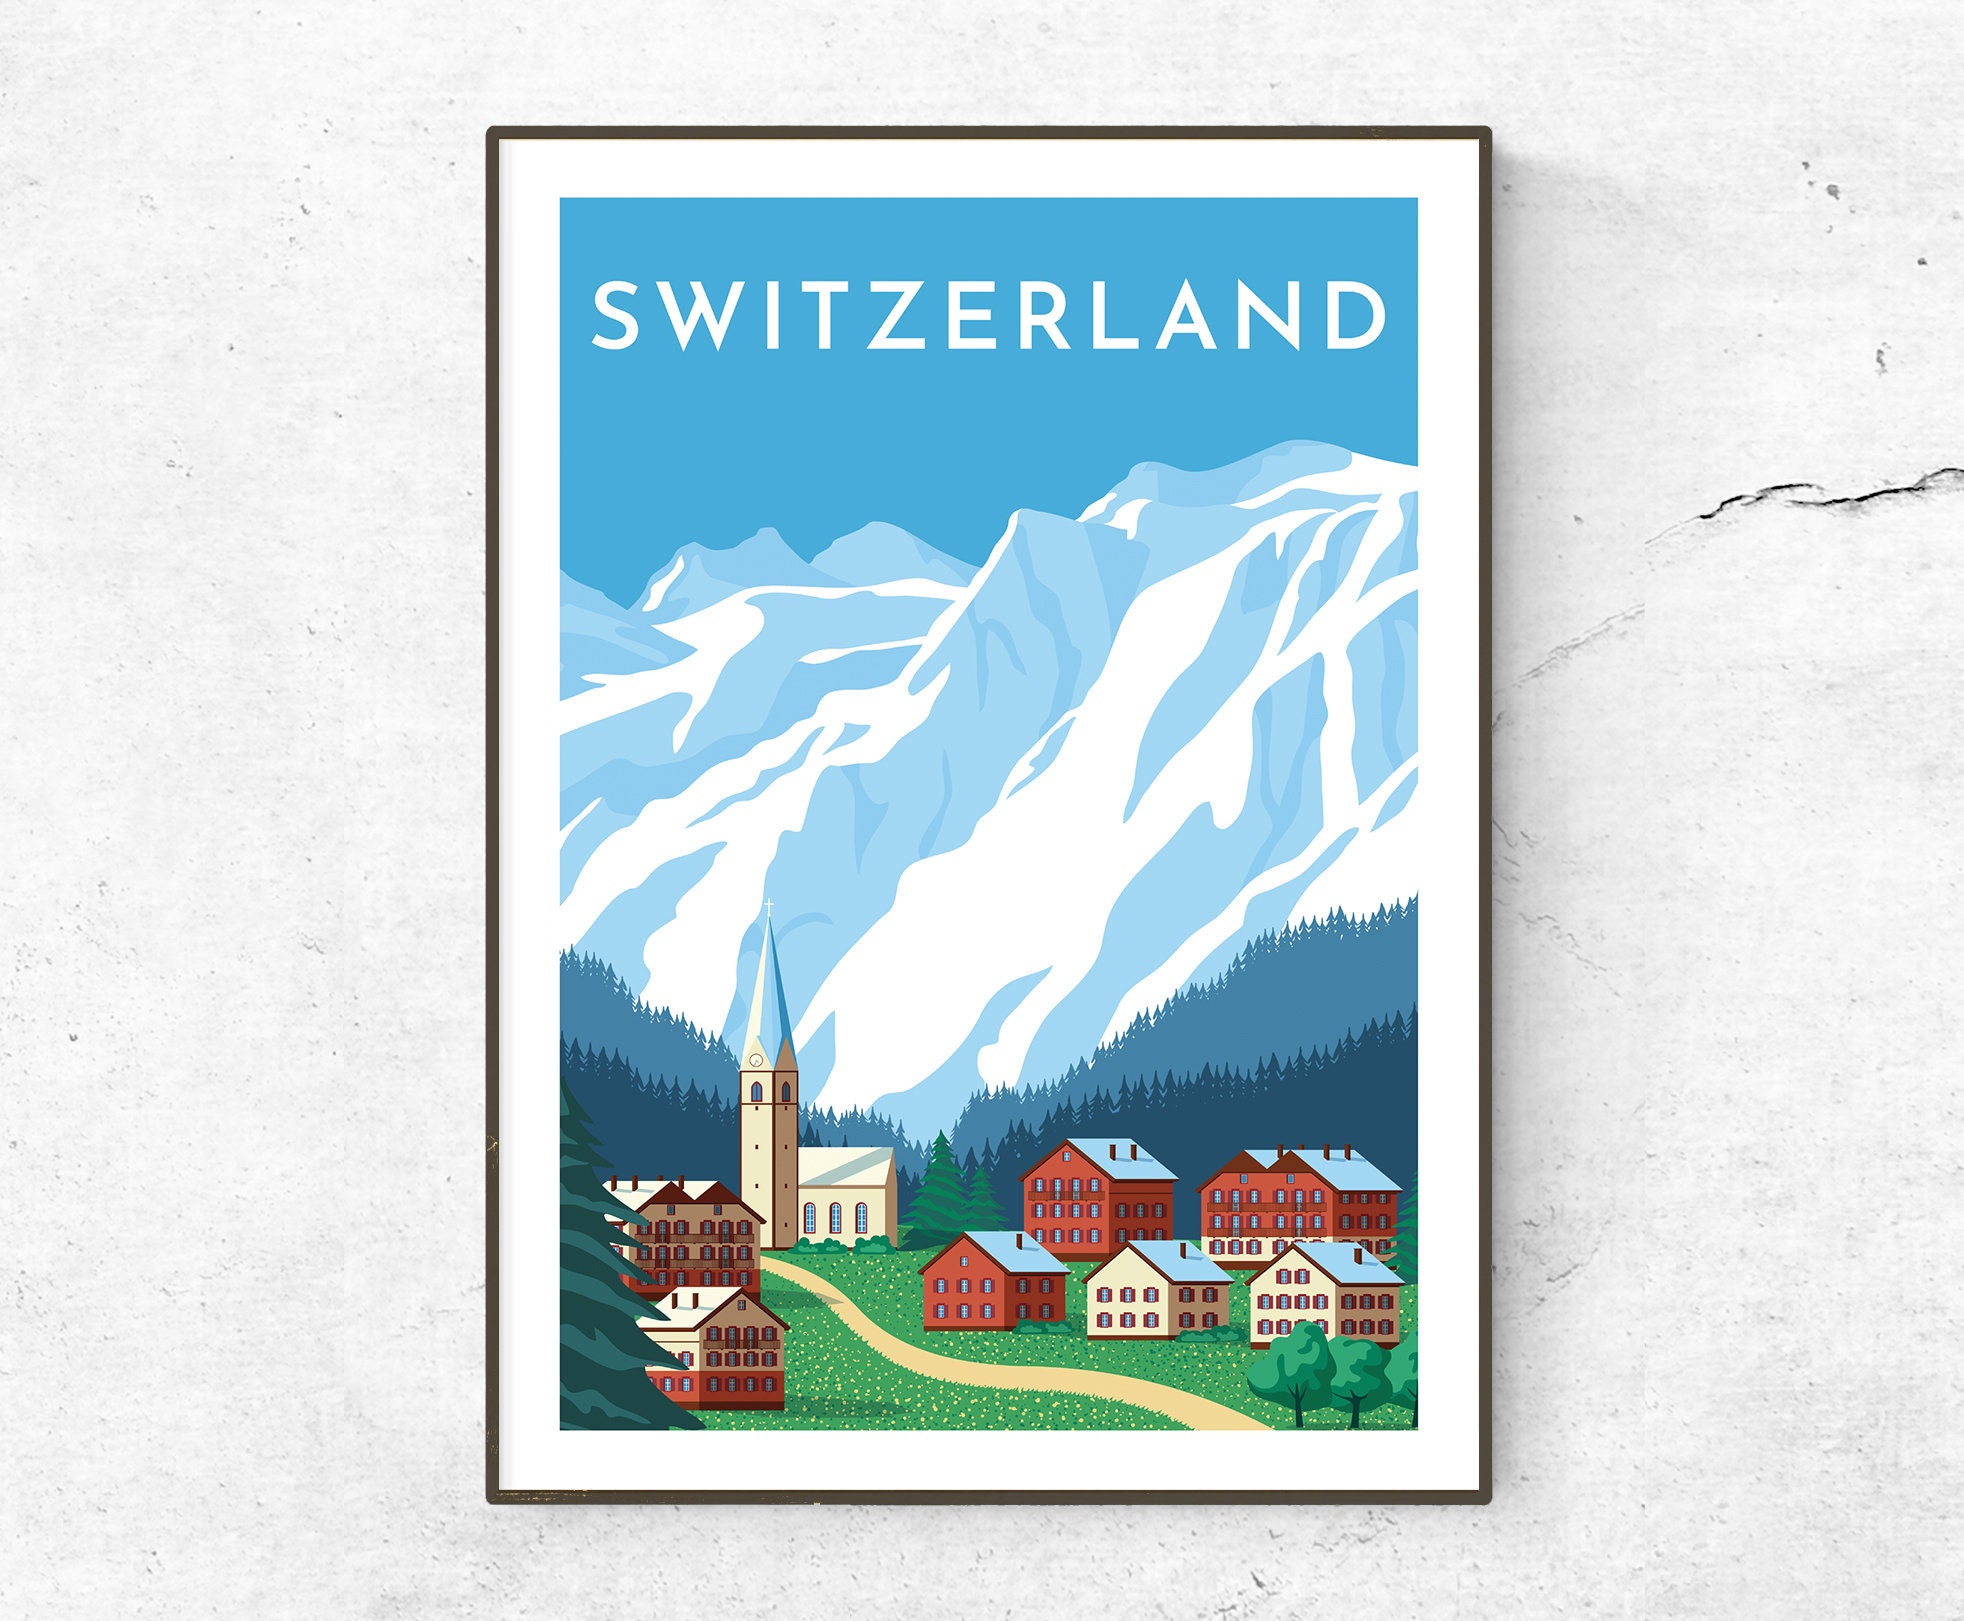 Швейцарские плакаты. Швейцария плакат. Швейцария Постер. Швейцарские постеры. Постеры в швейцарском стиле.